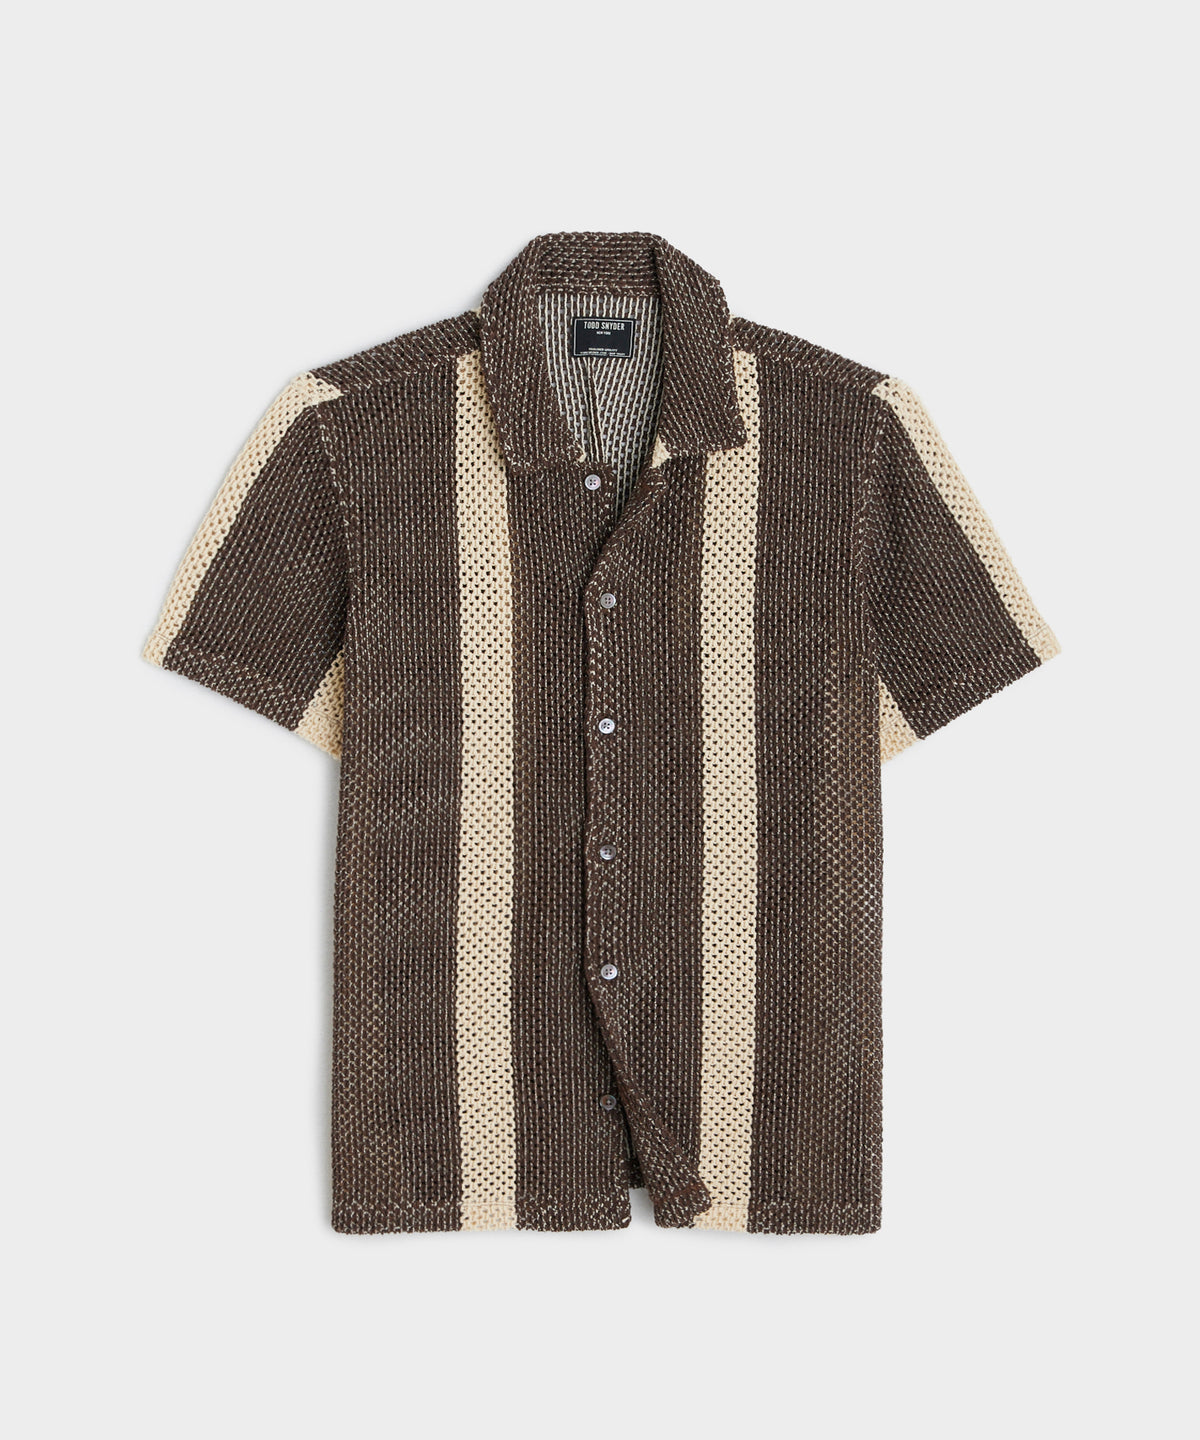 Striped Open-Knit Cabana Shirt in Espresso Bean